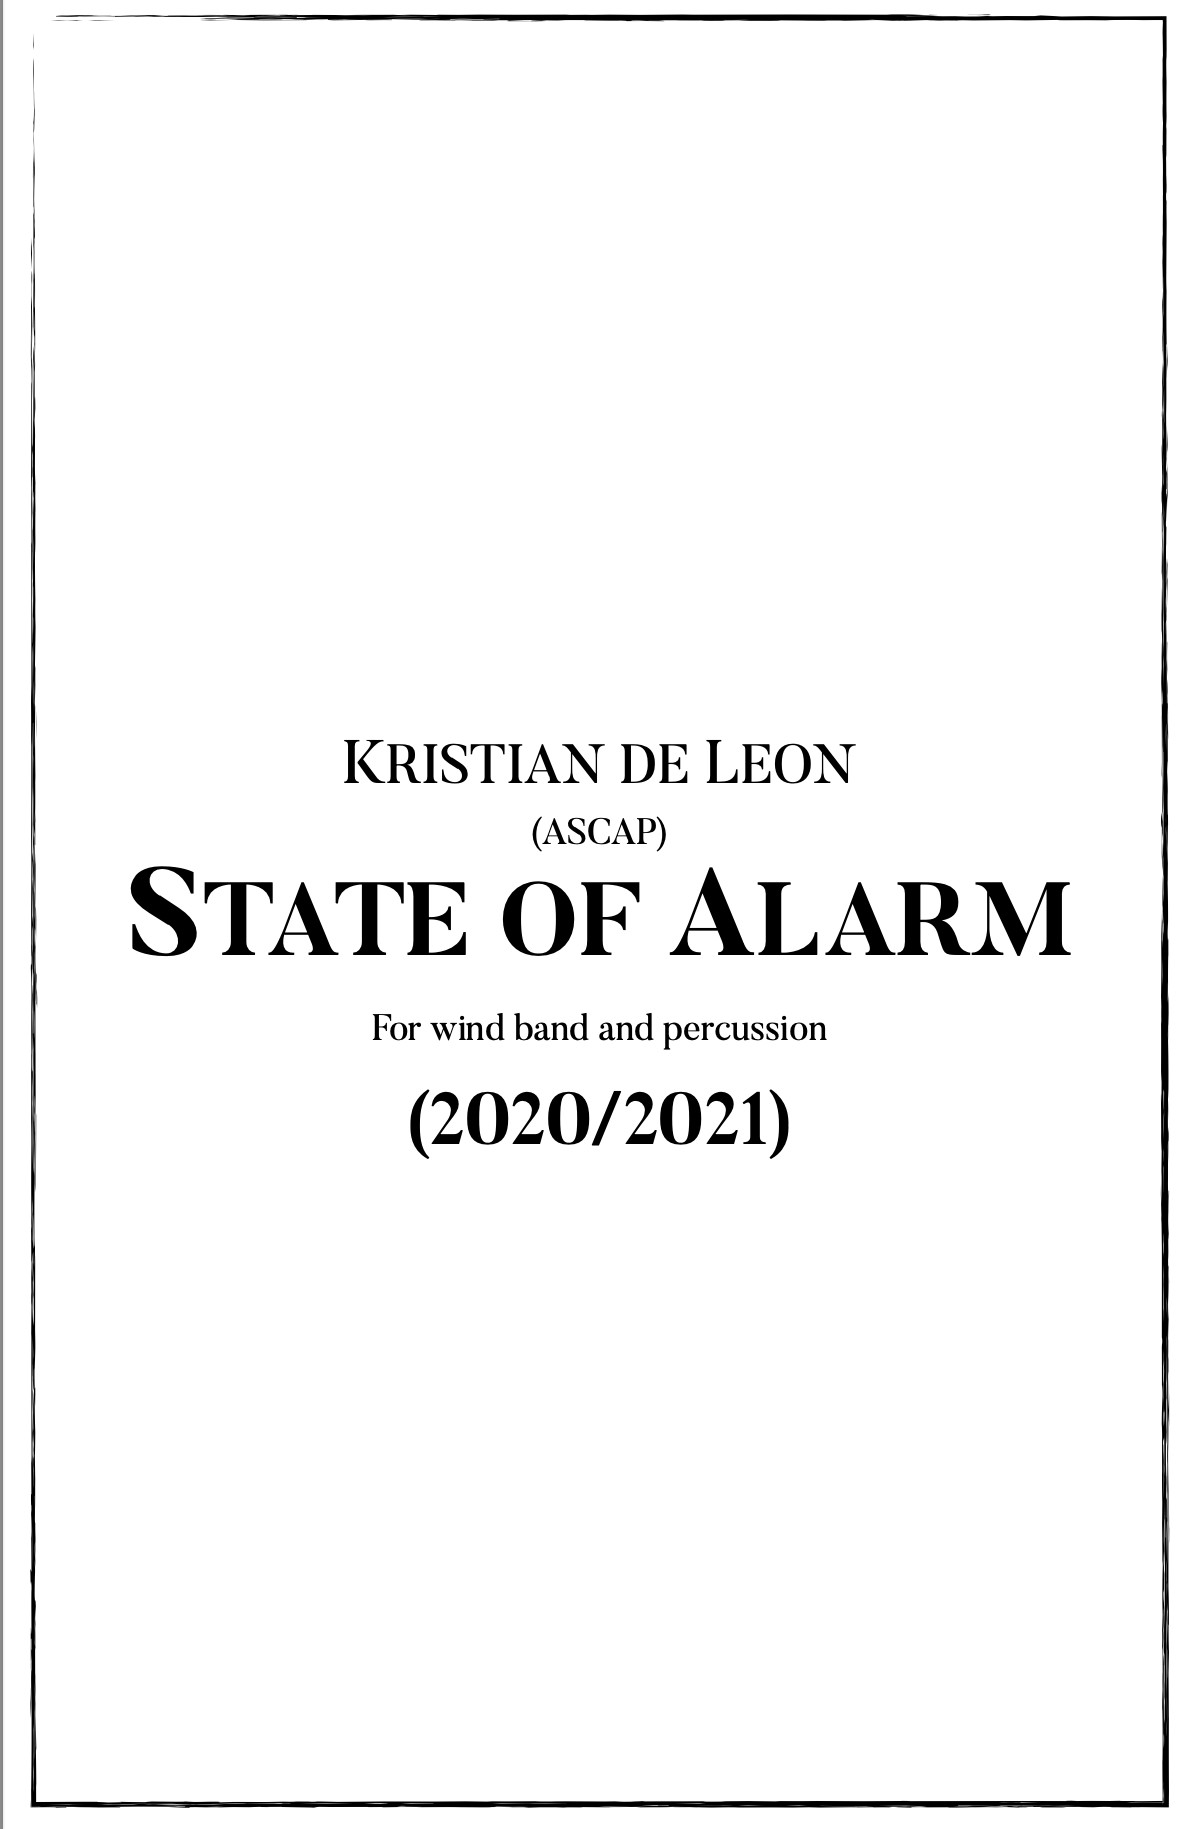 State Of Alarm by Kristian De Leon